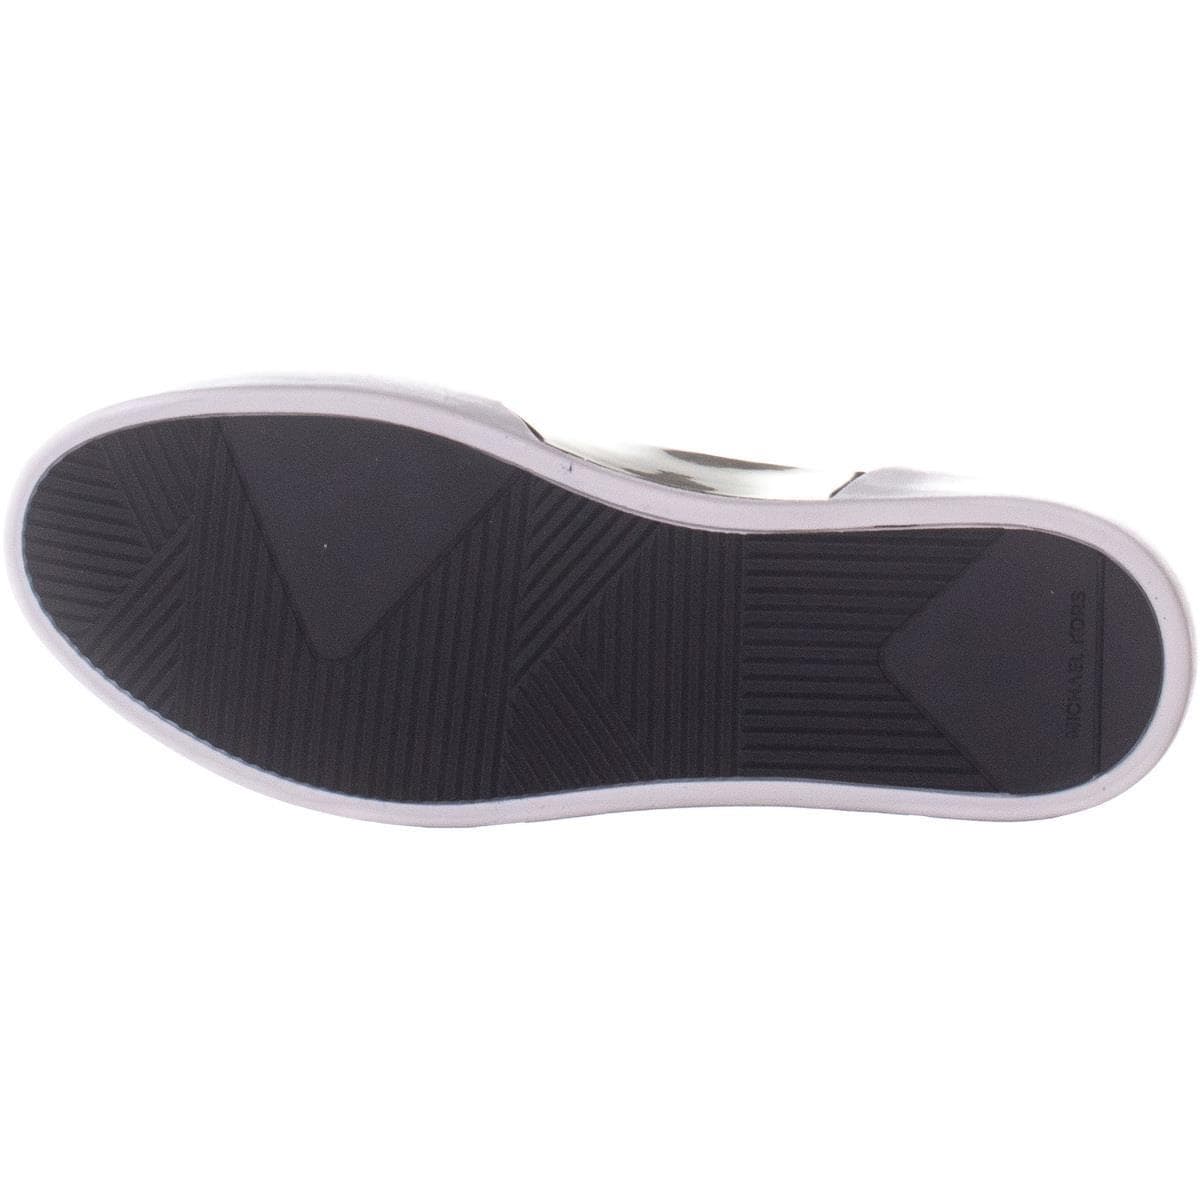 grover slip on sneakers